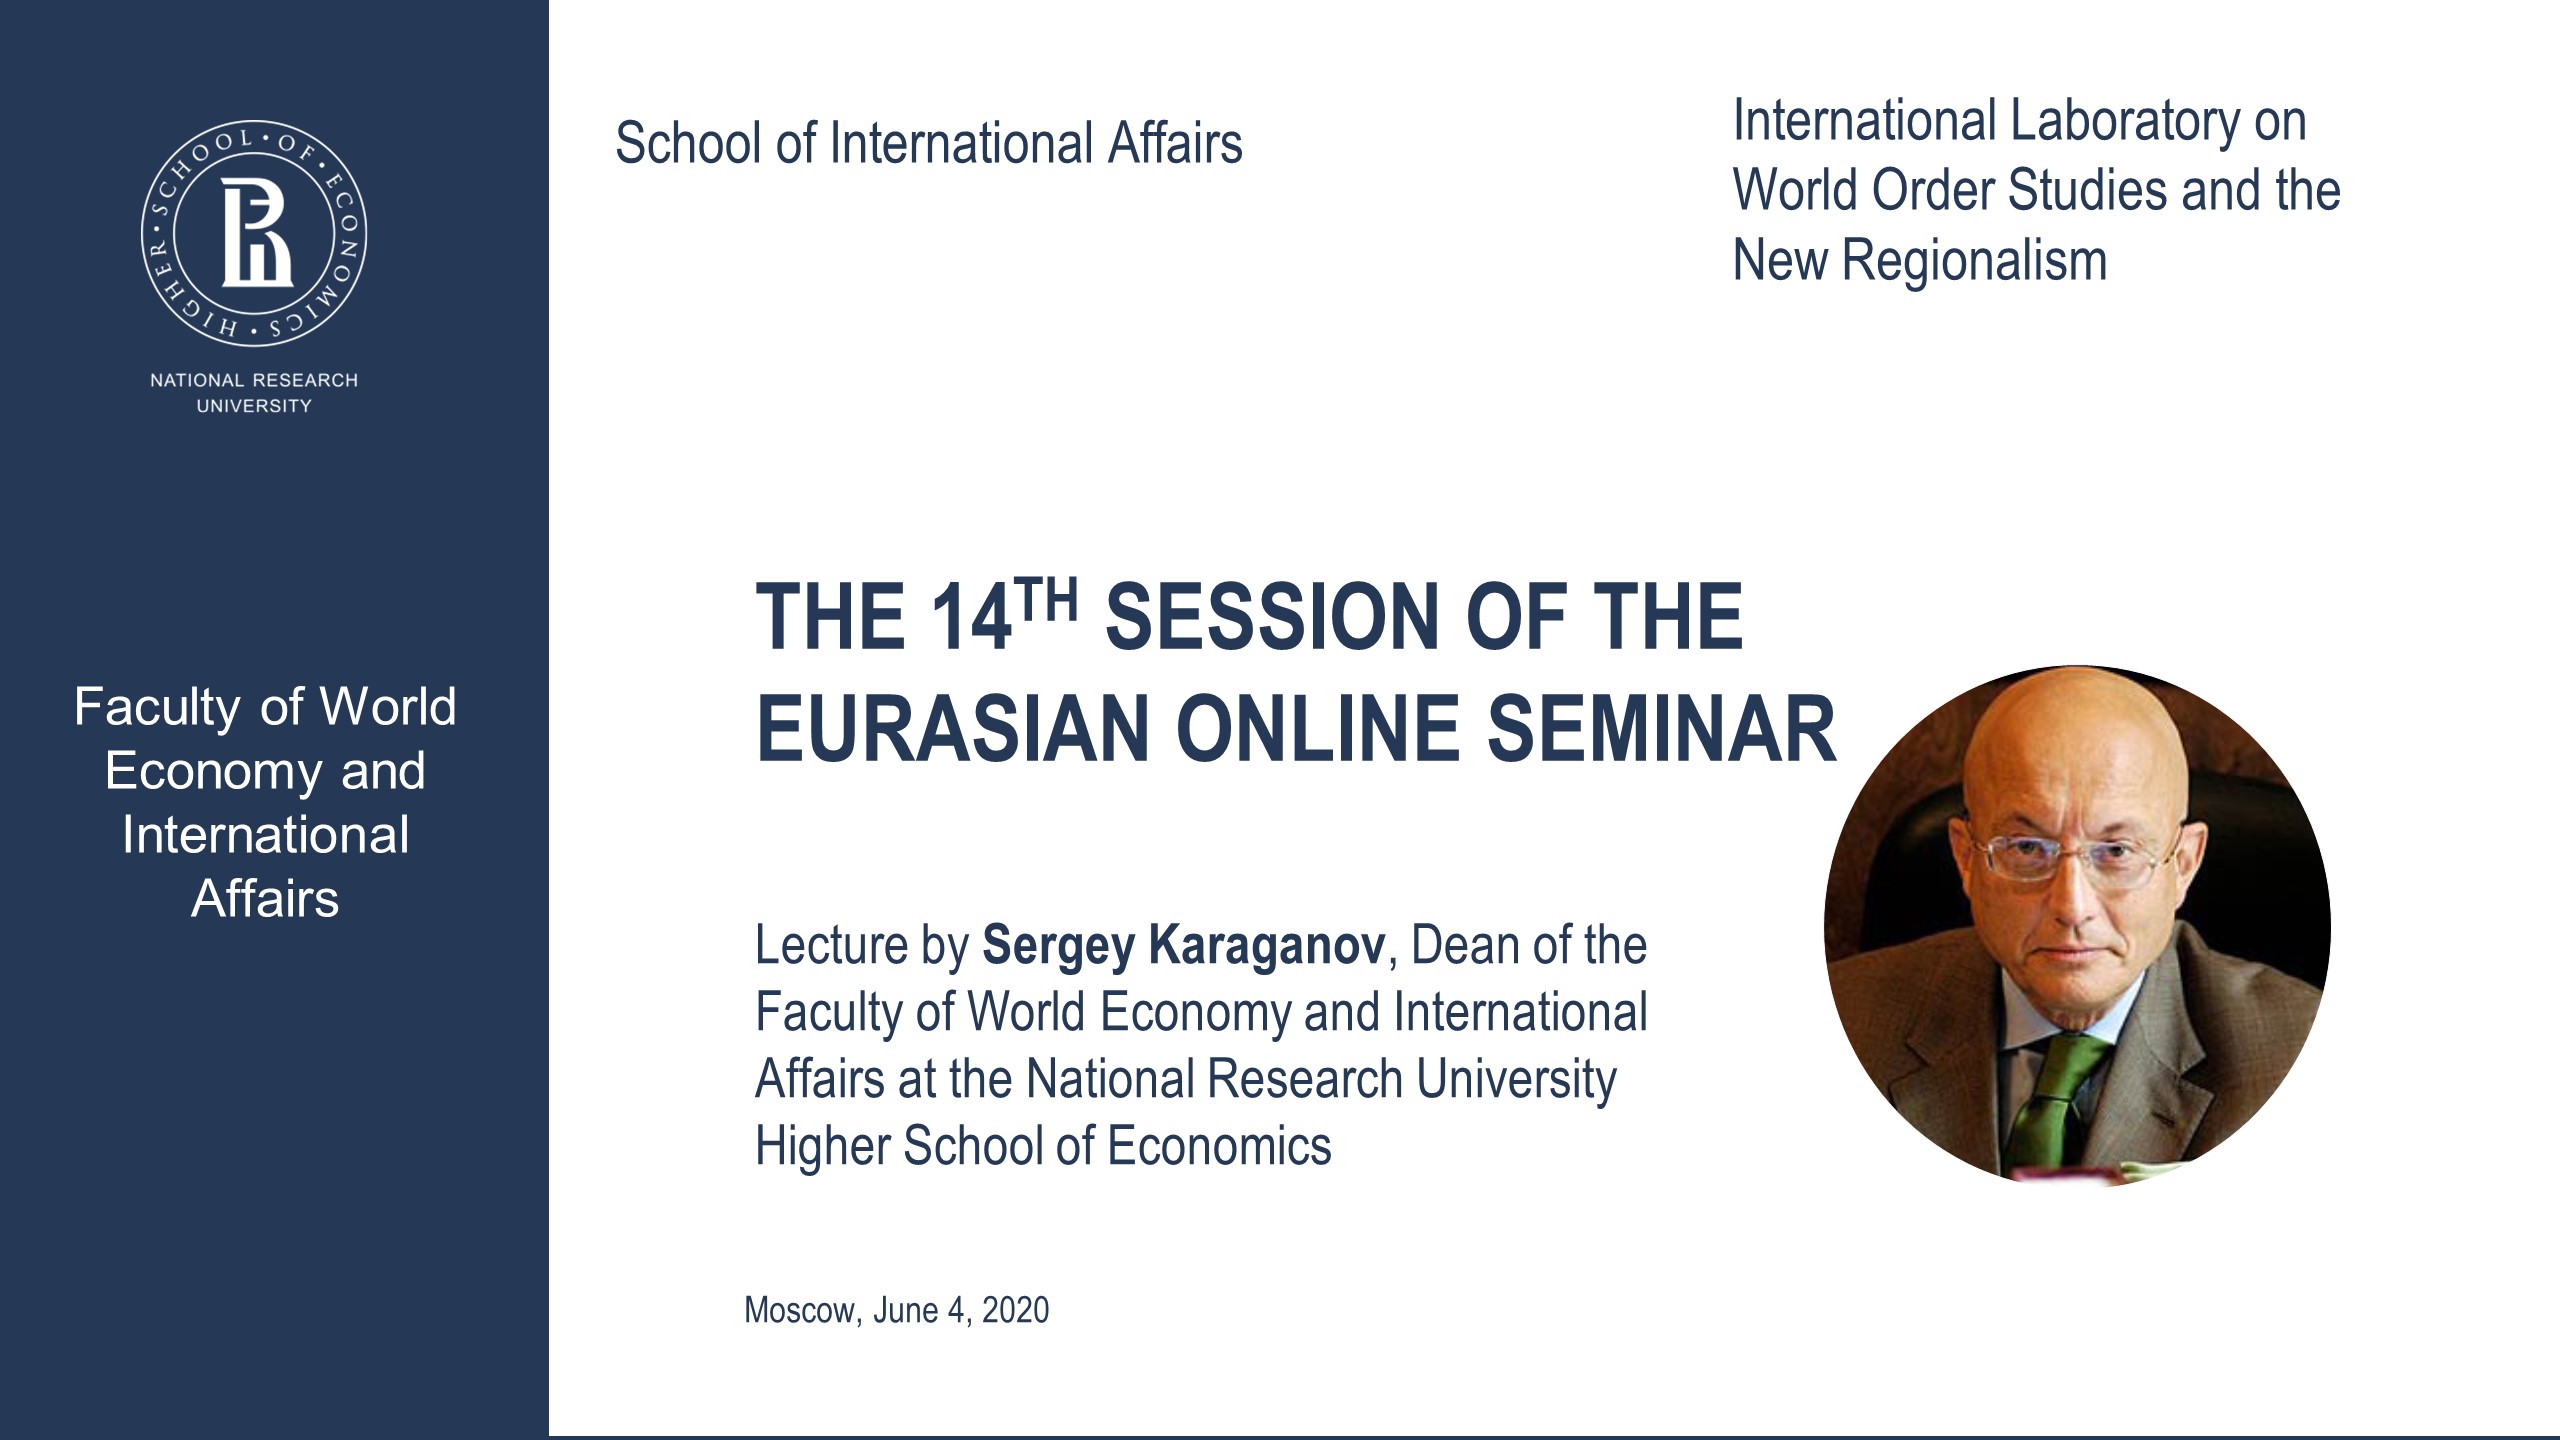 The 14th Session of Eurasian Online Seminar with Sergey Karaganov